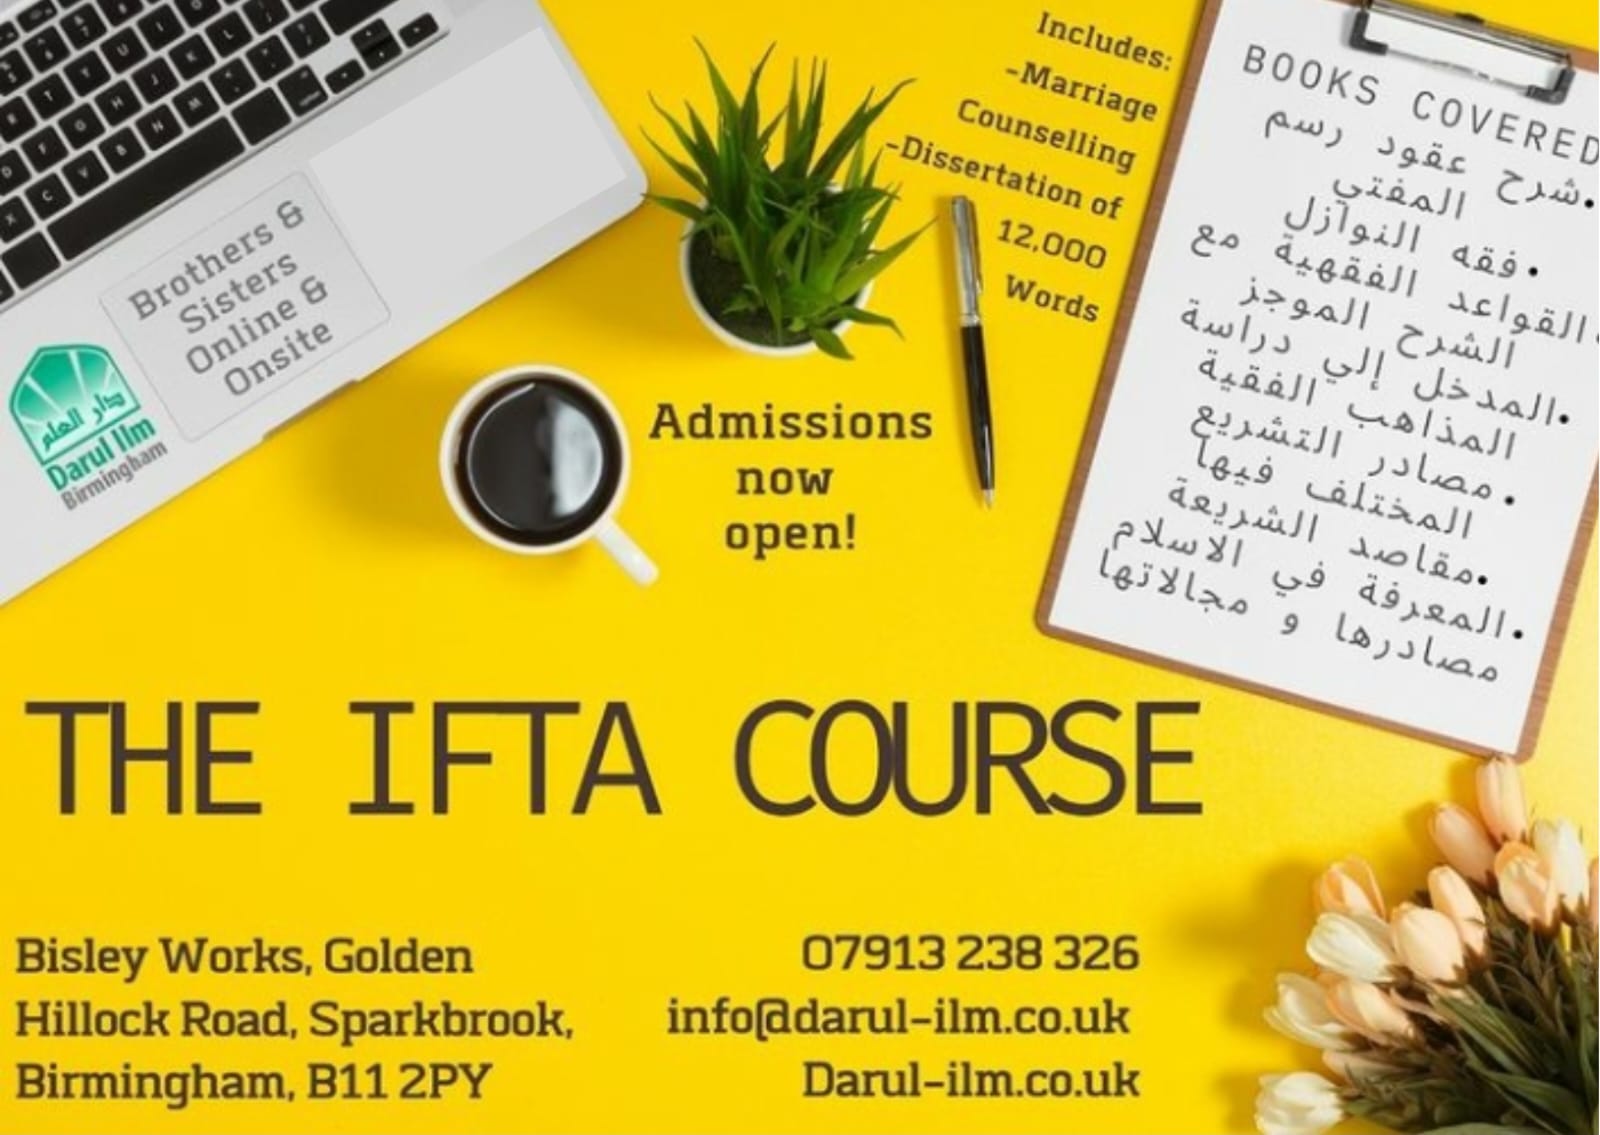 The Ifta Course